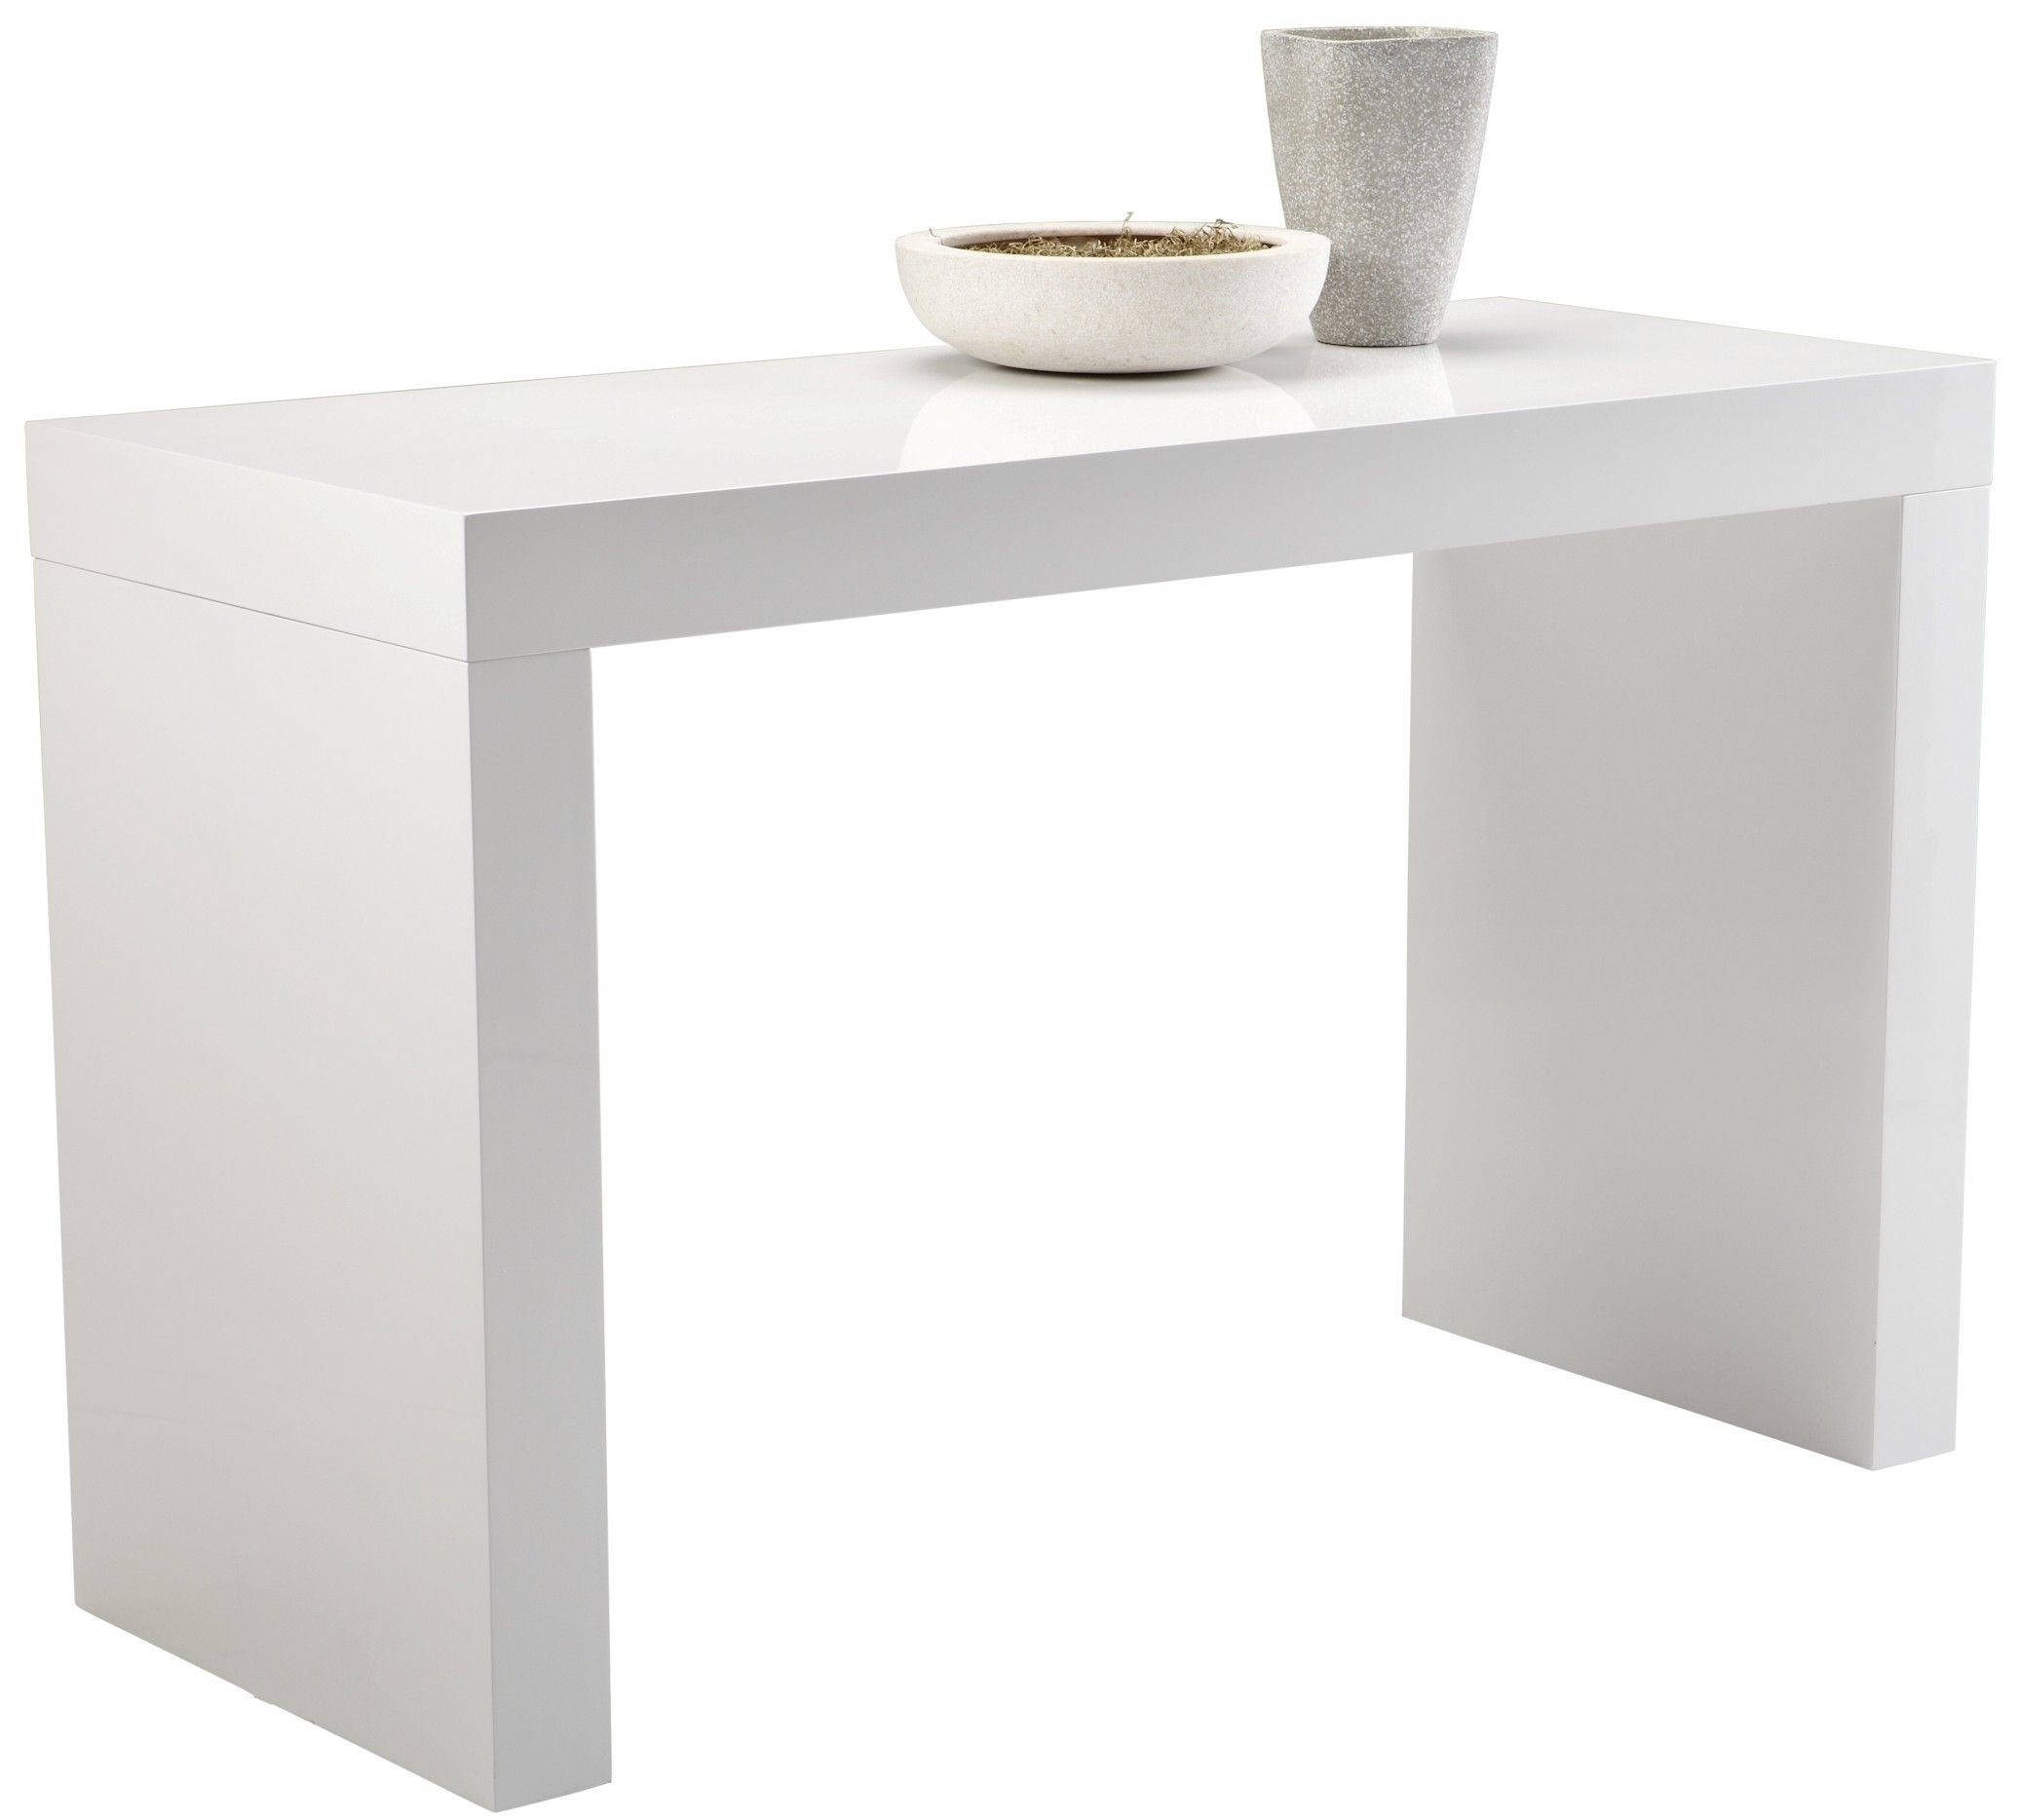 Faro white high gloss c shape bar table counter height